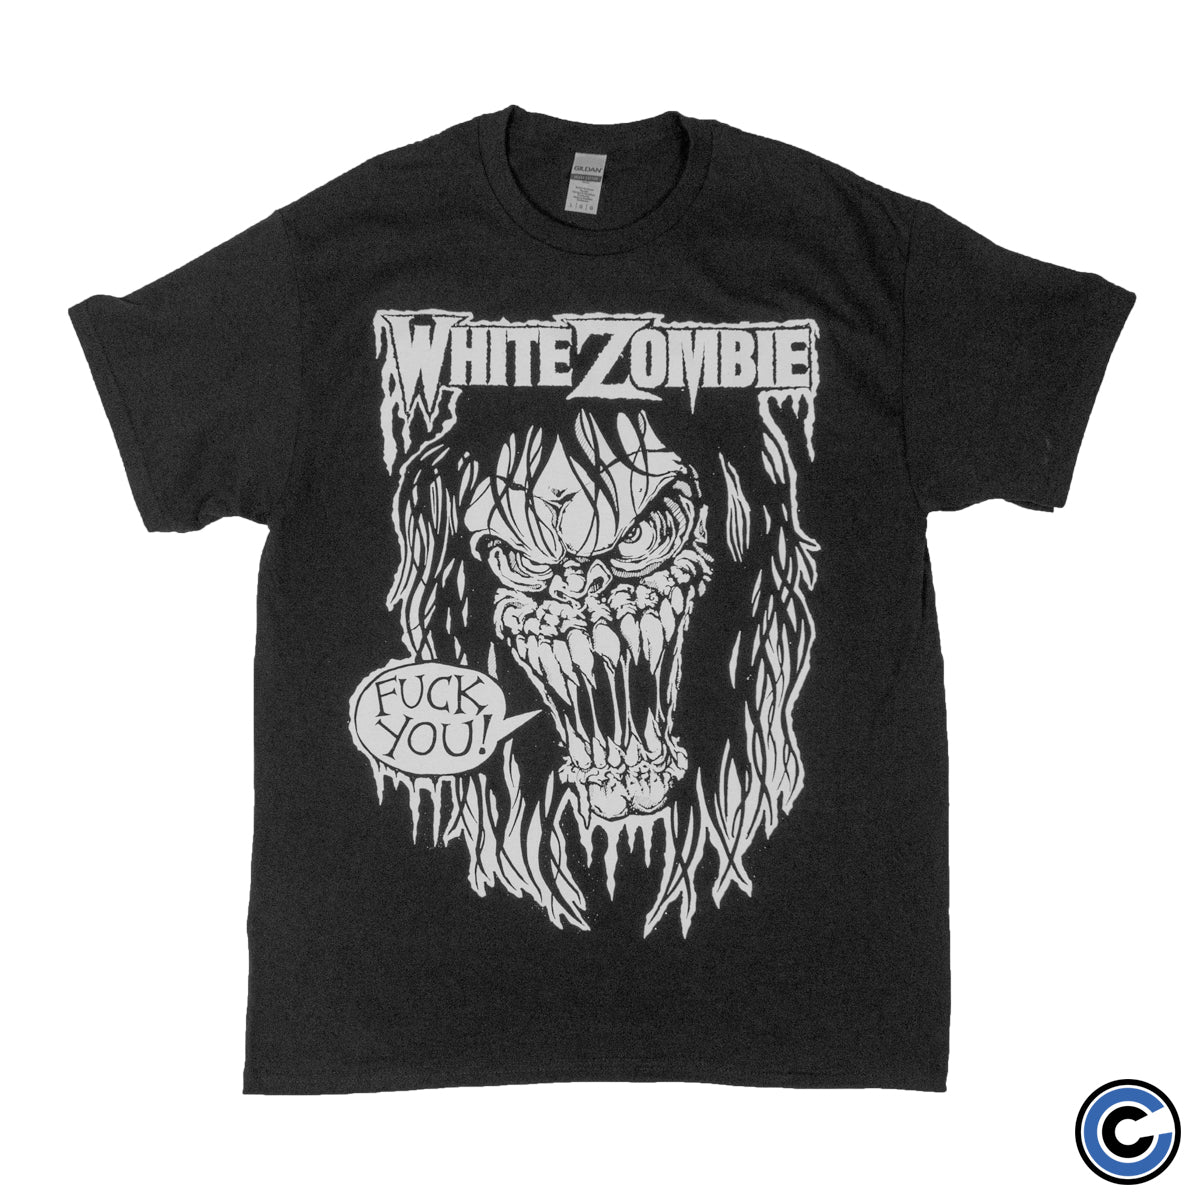 White Zombie "Fuck You" Shirt